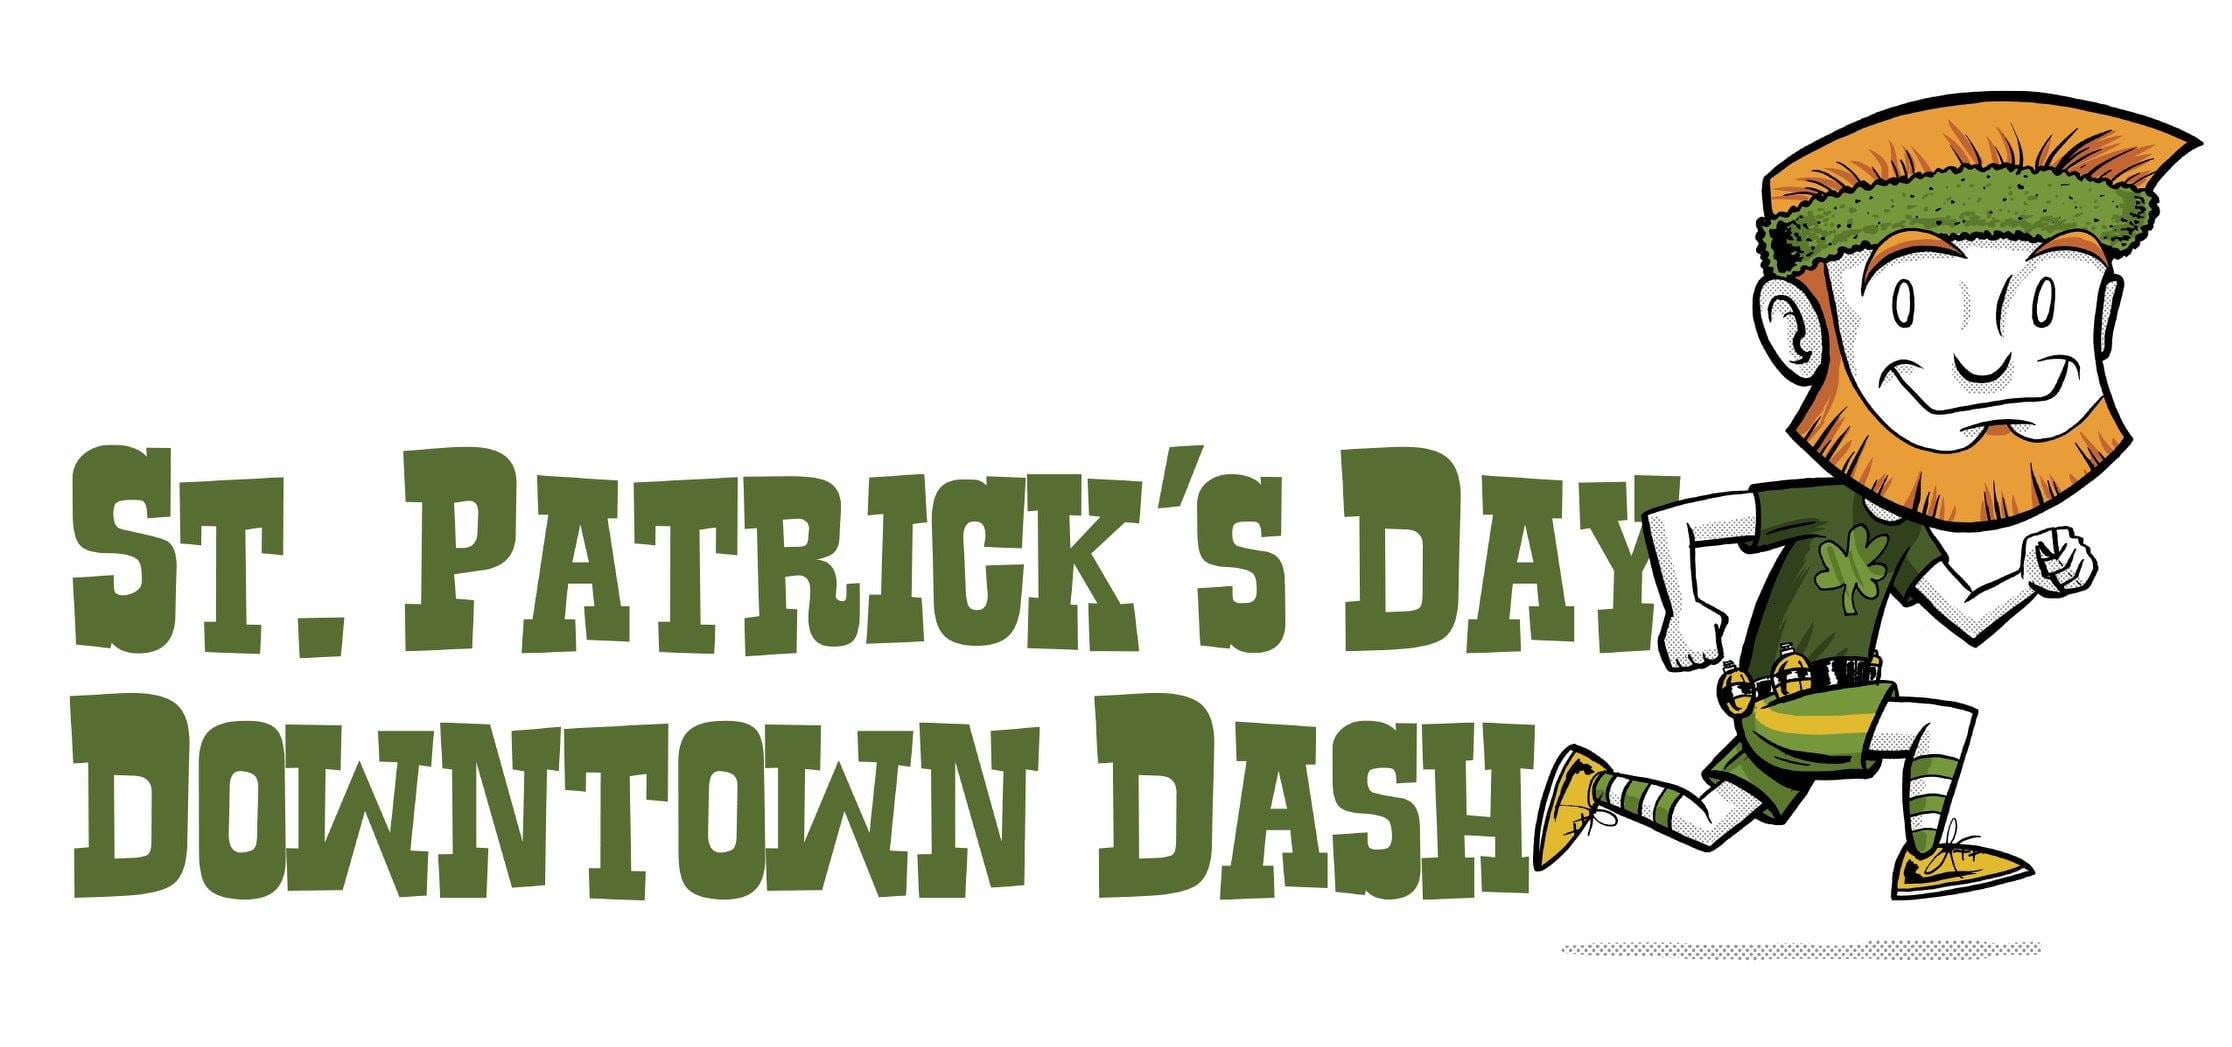 St. Patrick’s Day Downtown Dash 5K logo on RaceRaves